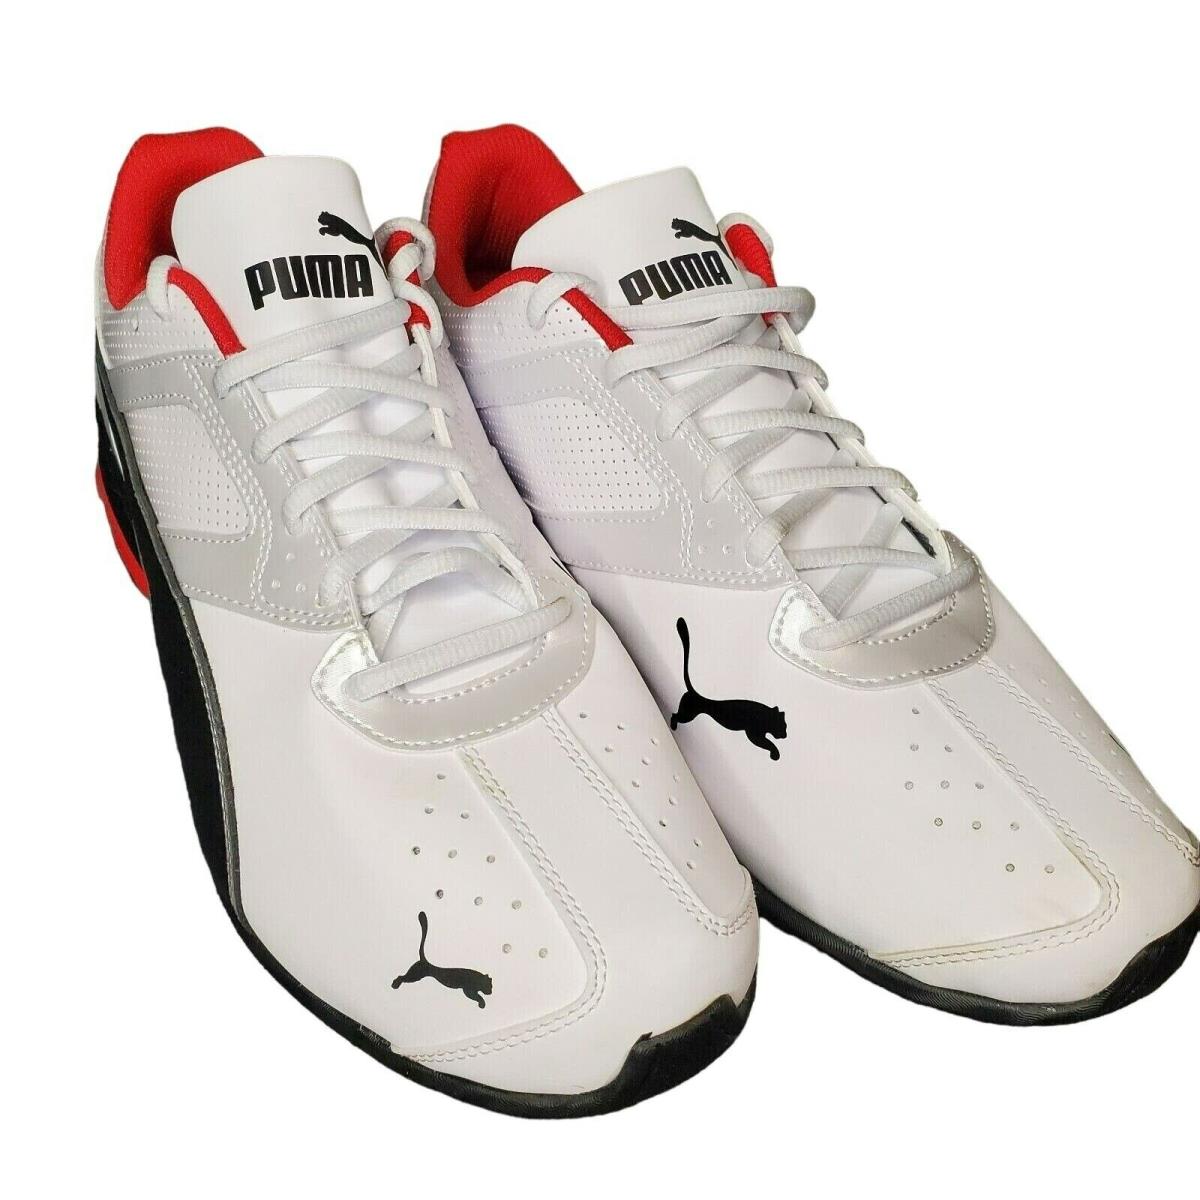 Puma Mens Tazon 6 FM White/black/silver Running Shoe 12 M Medium US